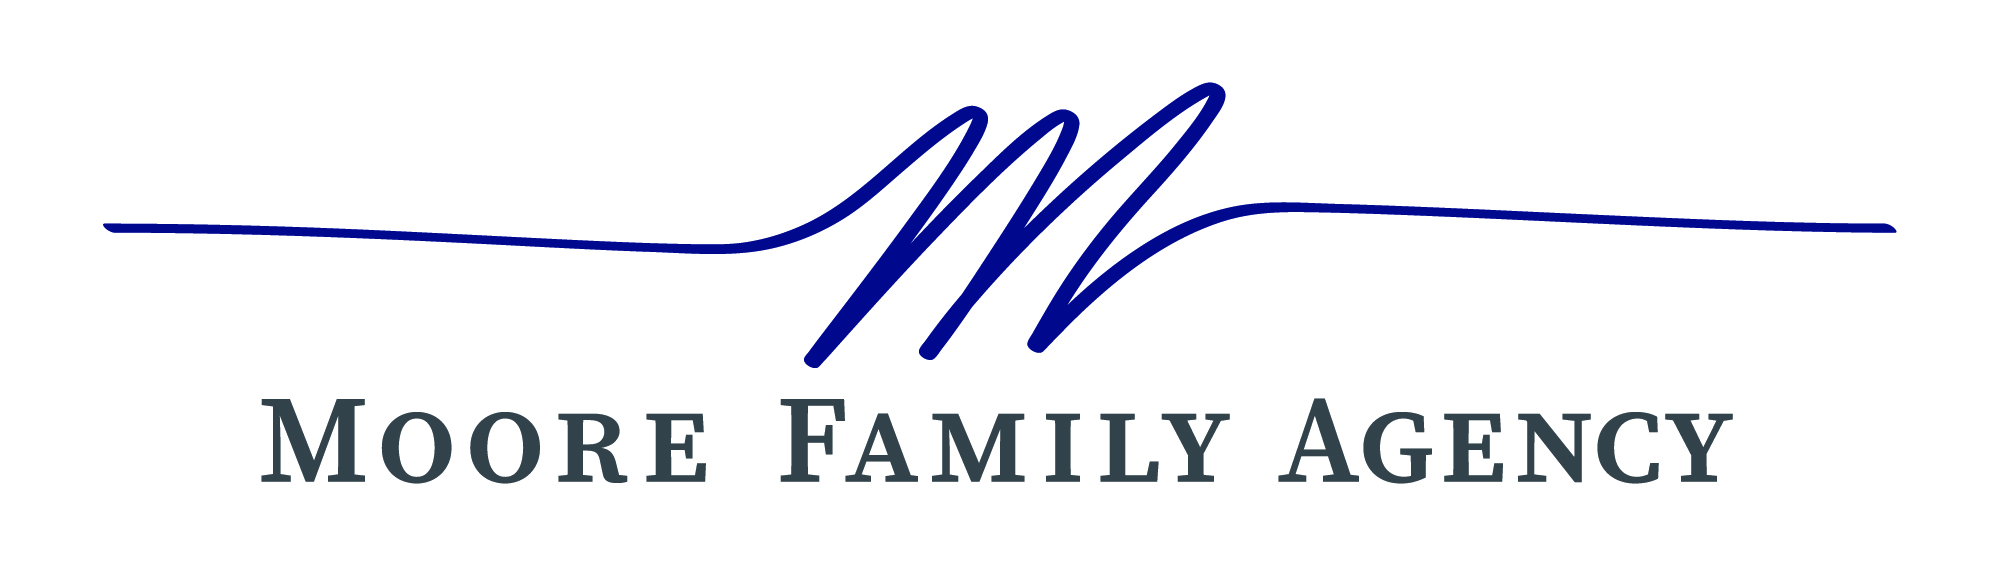 Moore Family Agency